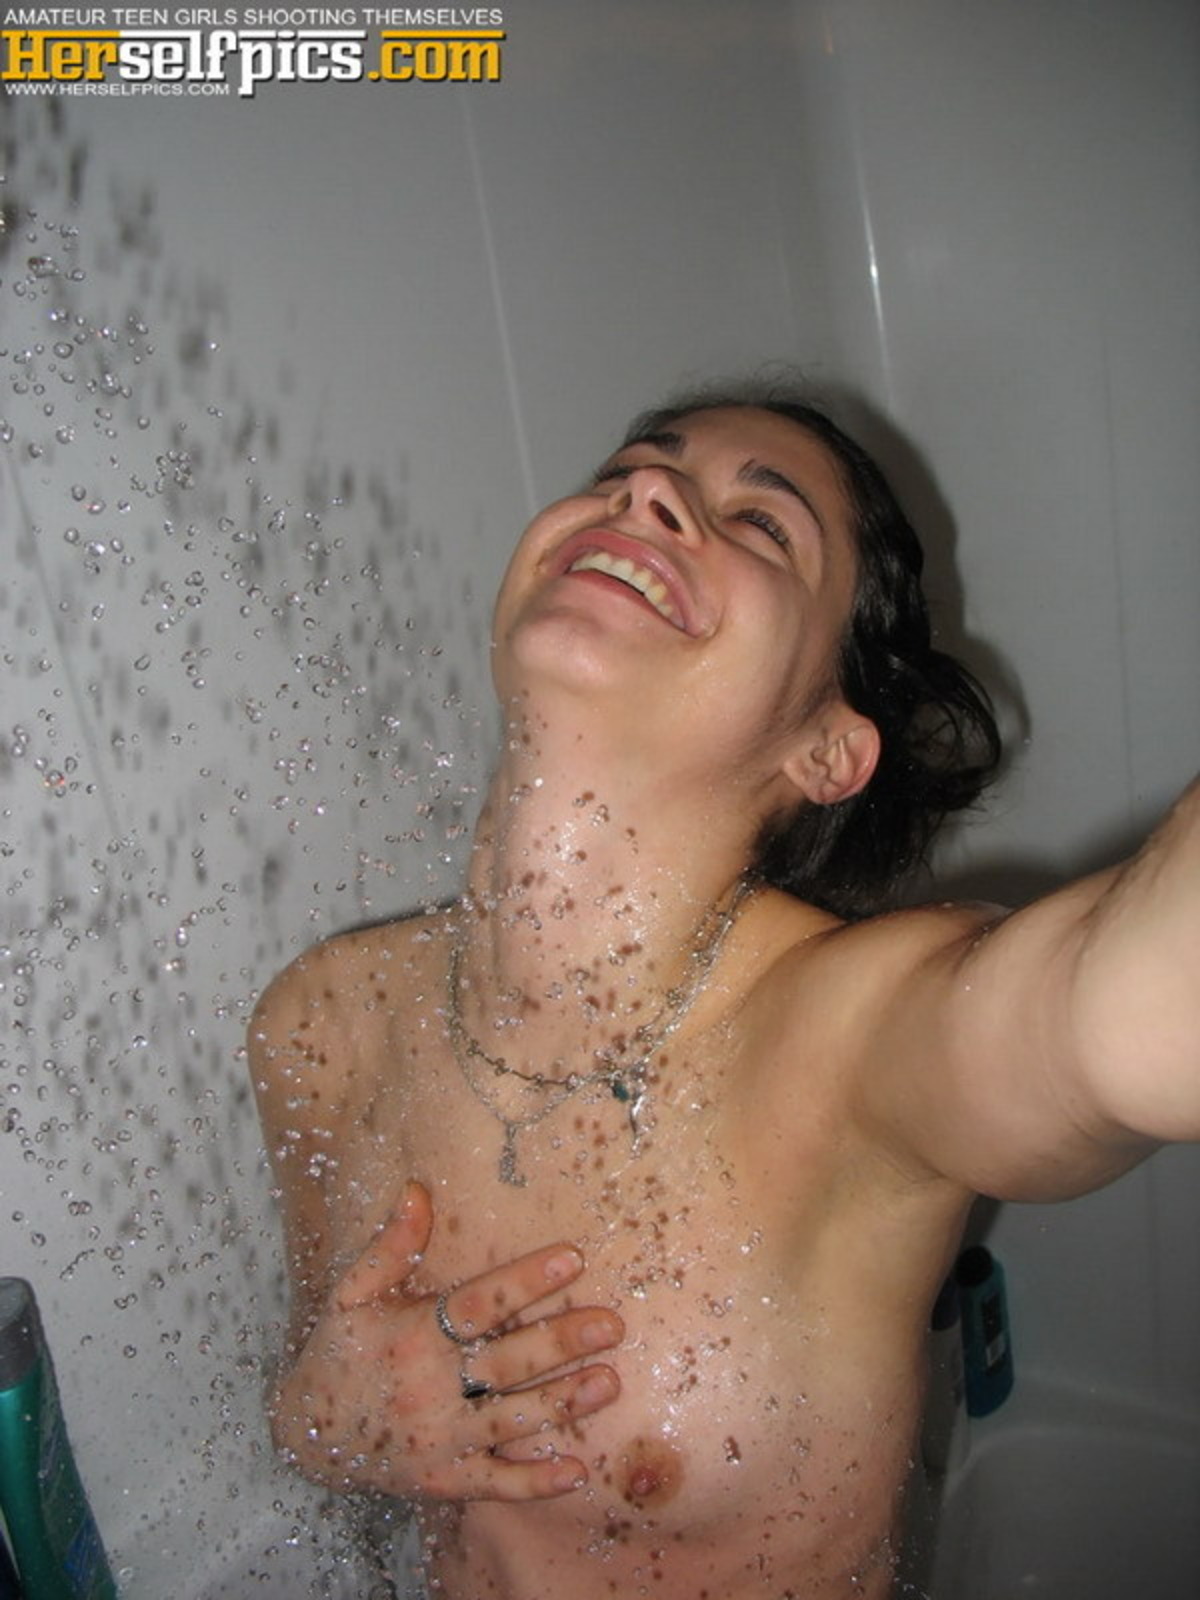 Cute Amateur Taking a Shower - picture 09